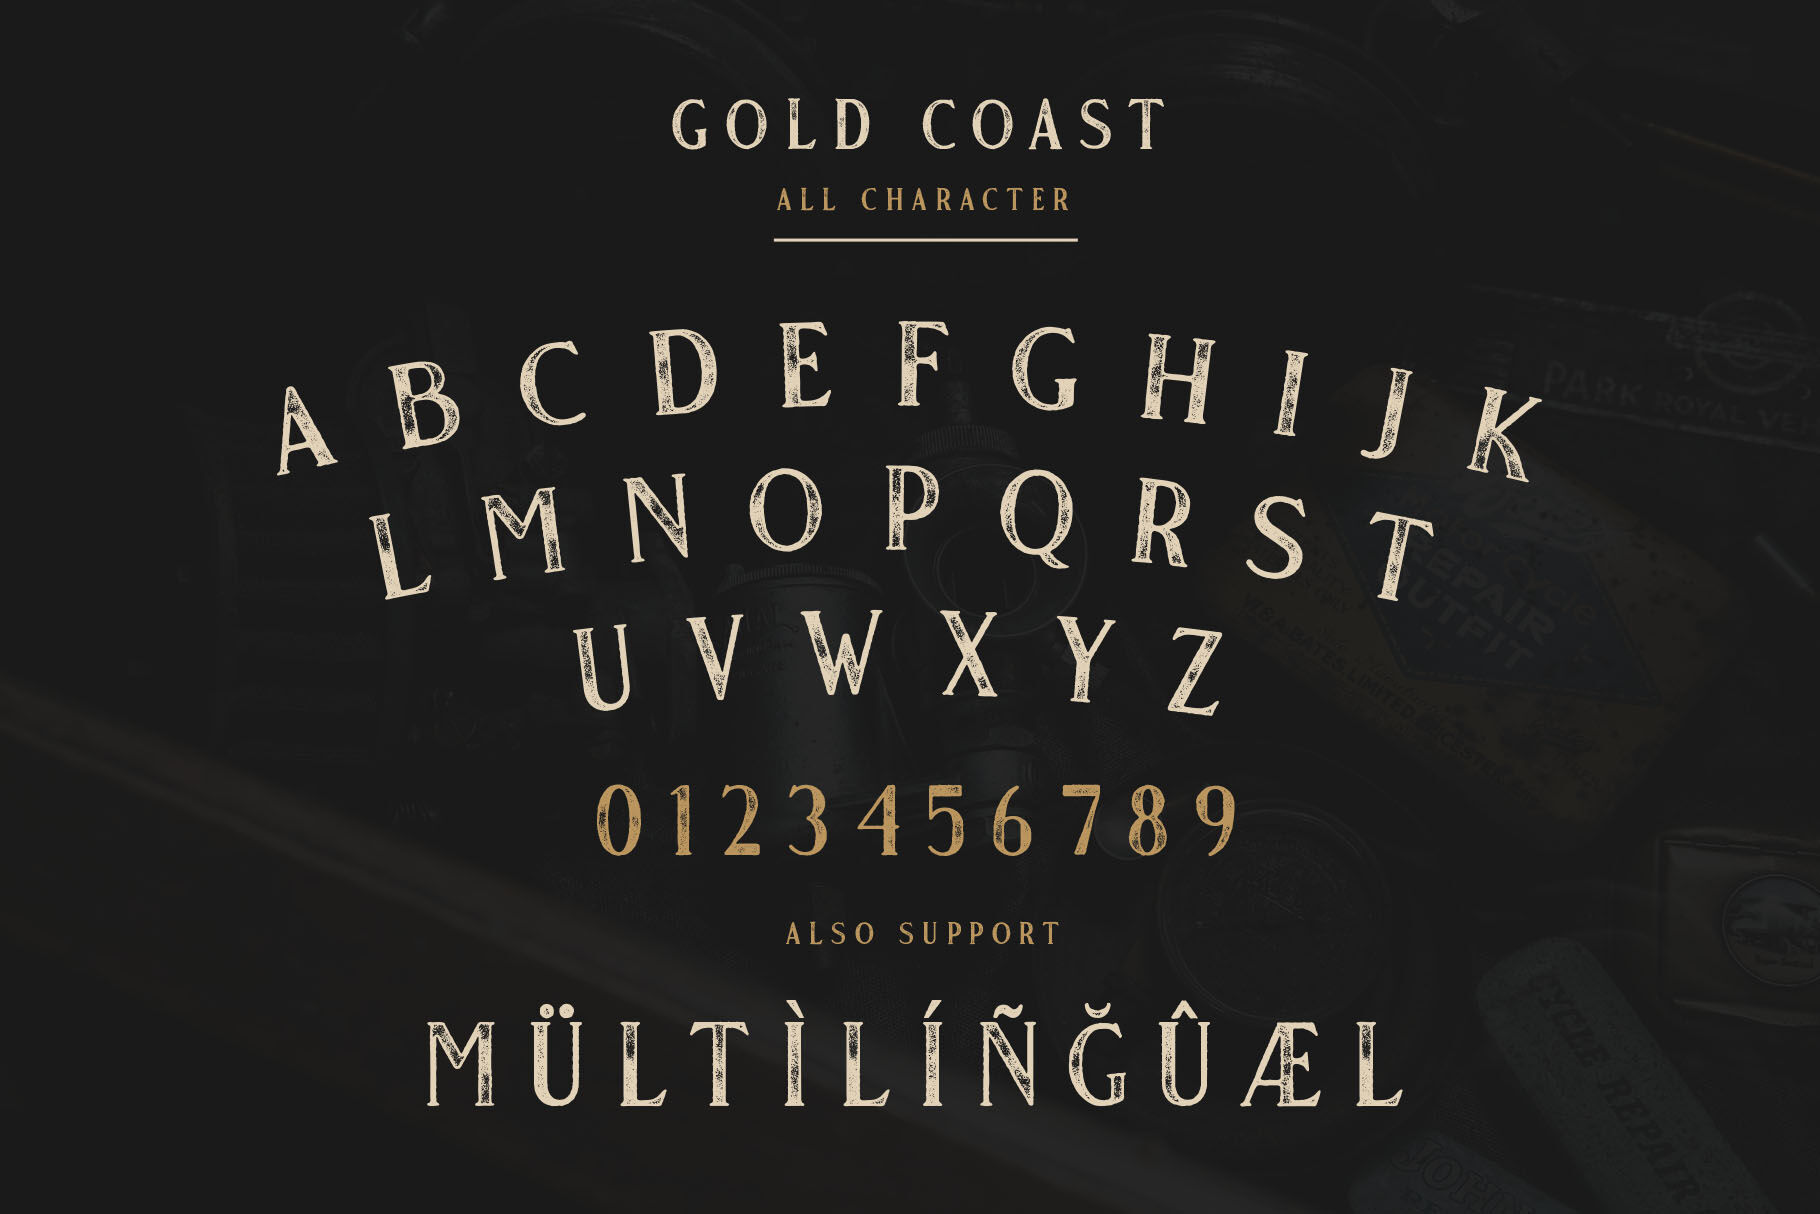 Gold Coast Vintage Serif Extras By Craft Supply Co Thehungryjpeg Com